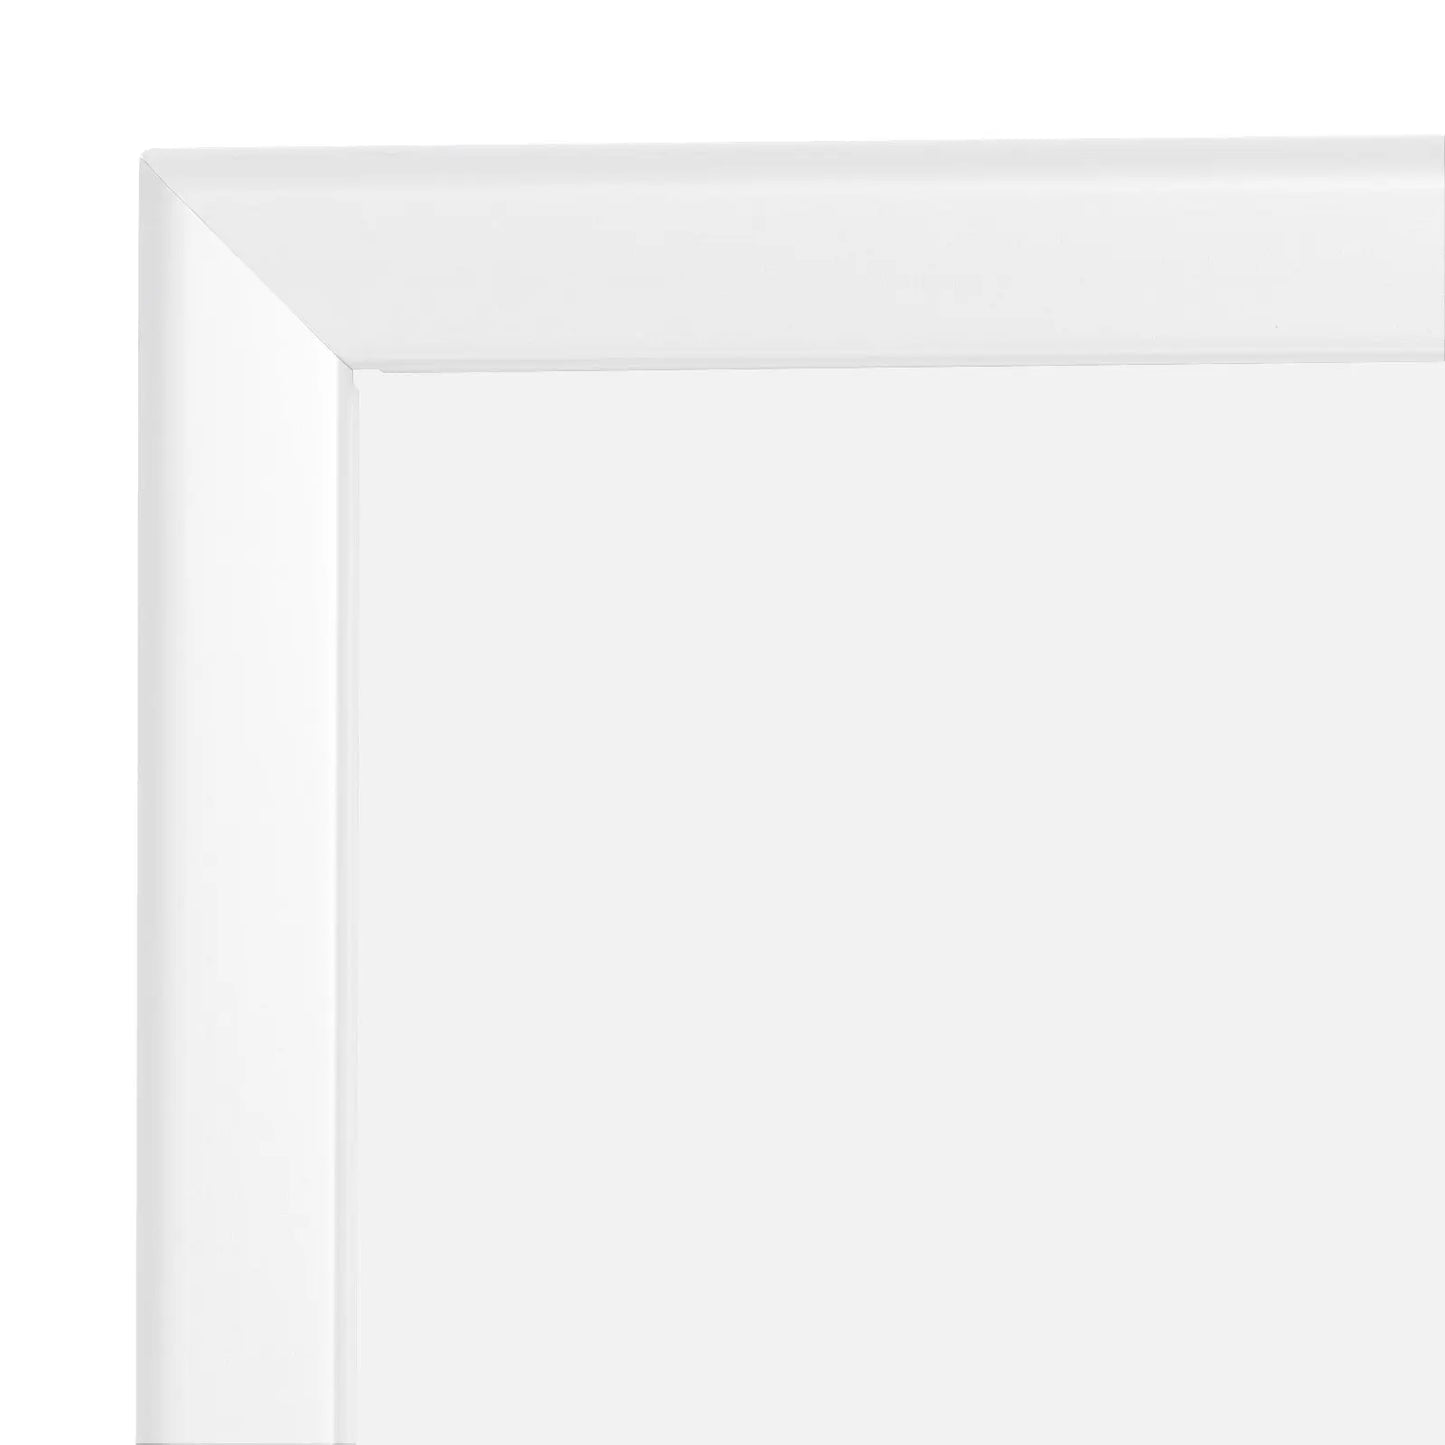 27x40 White Snap Frame - 1.25" Profile - Snap Frames Direct